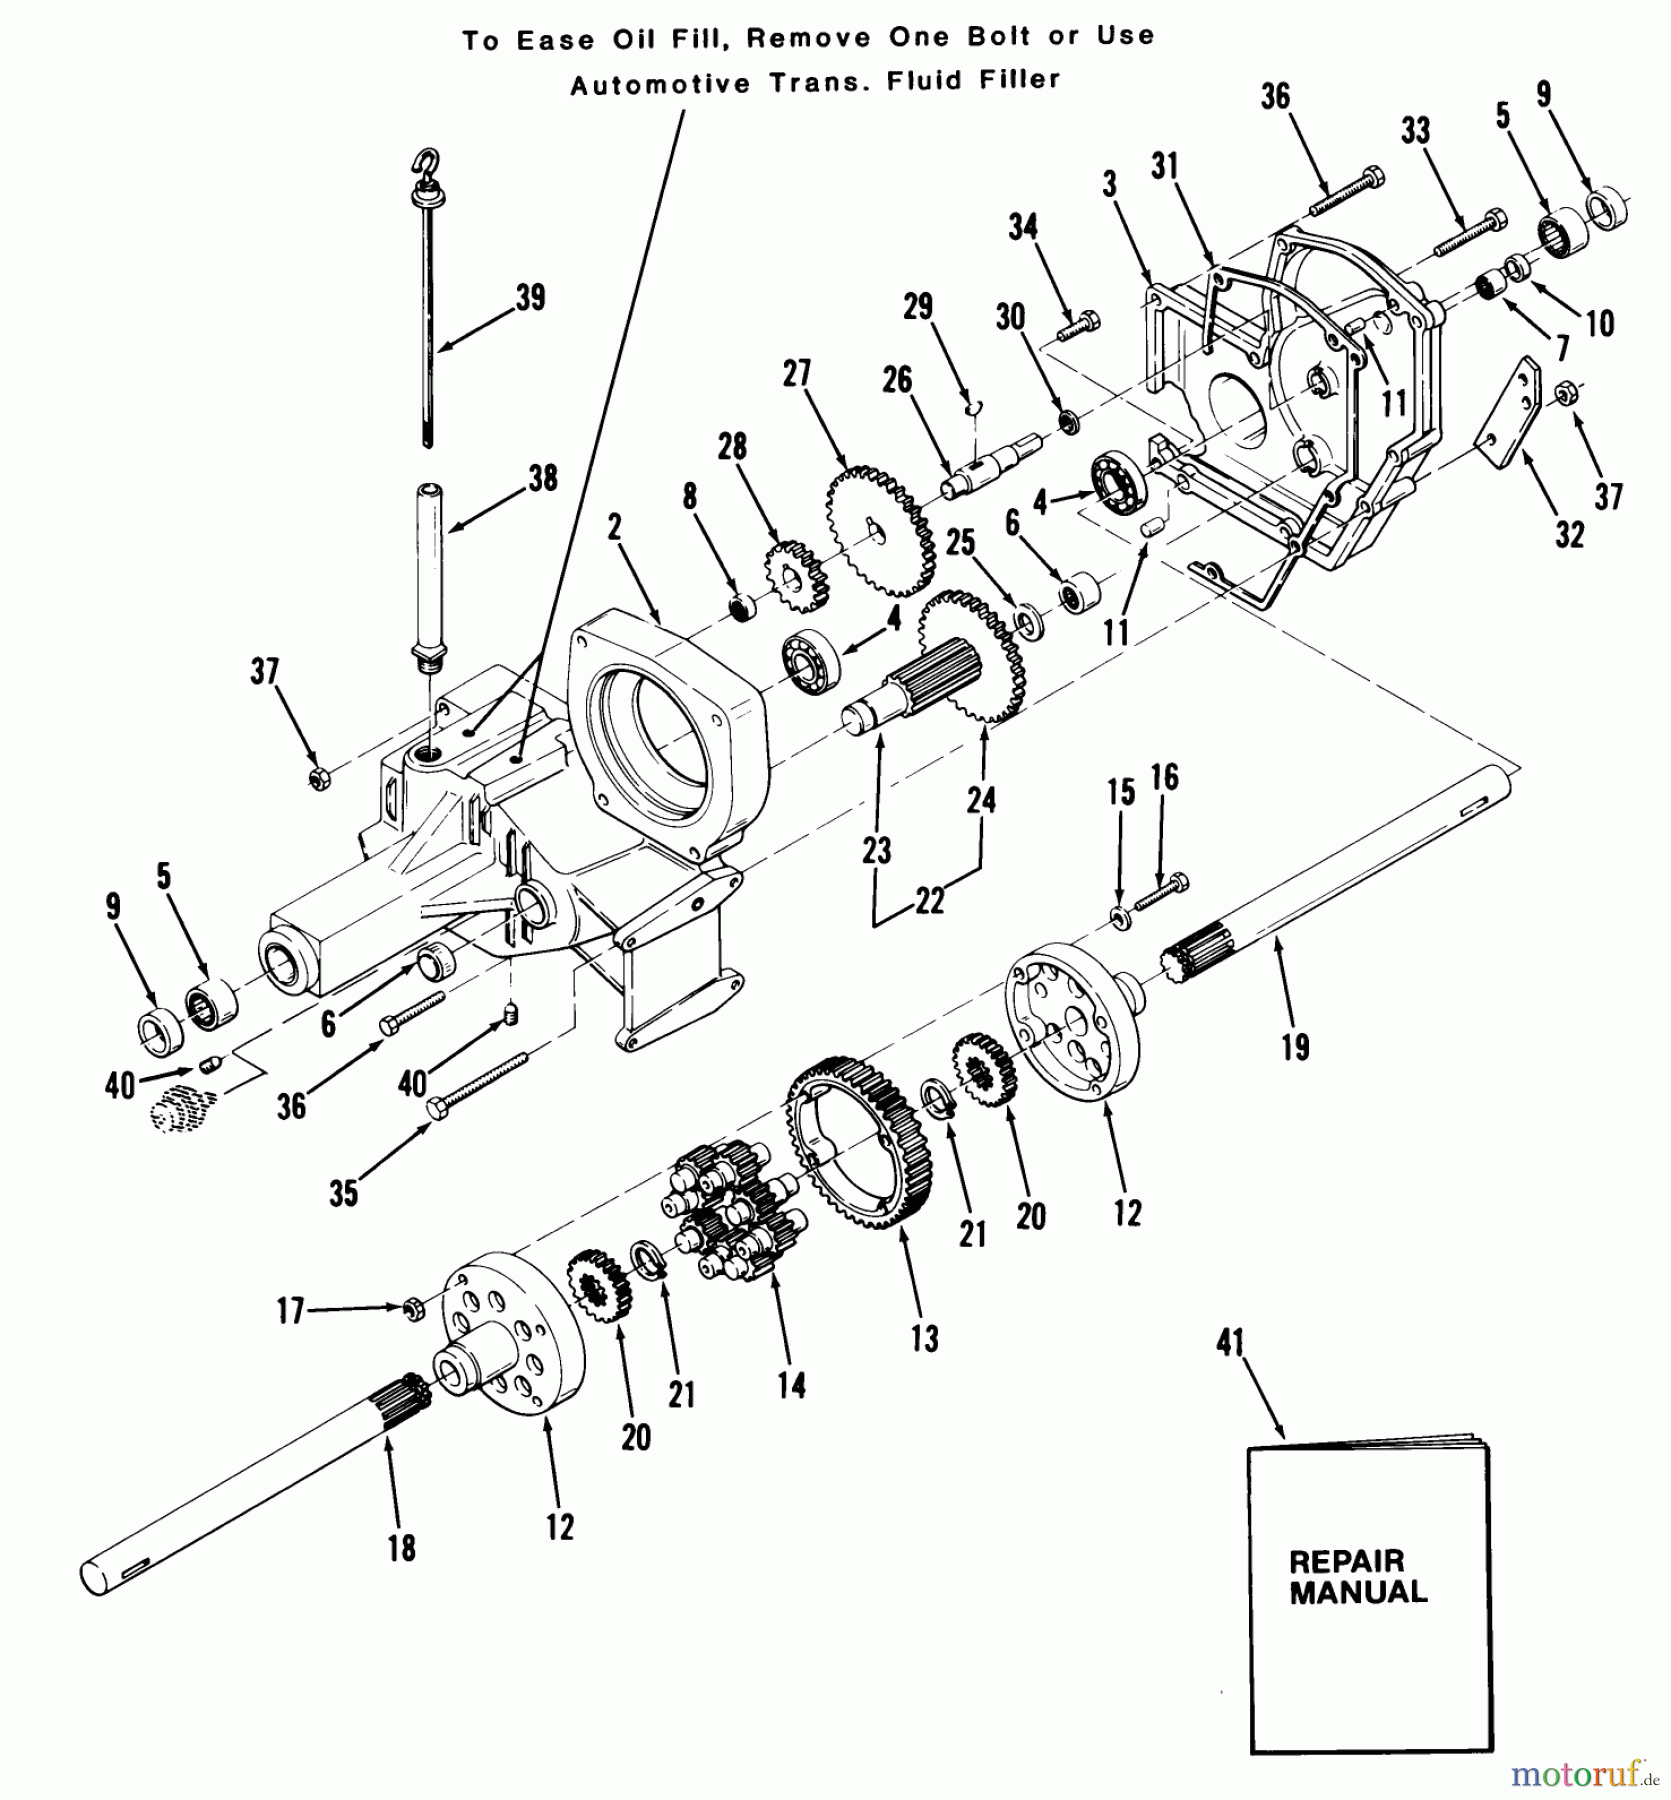  Toro Neu Mowers, Lawn & Garden Tractor Seite 1 31-18OE01 (518-H) - Toro 518-H Garden Tractor, 1988 TRANSAXLE